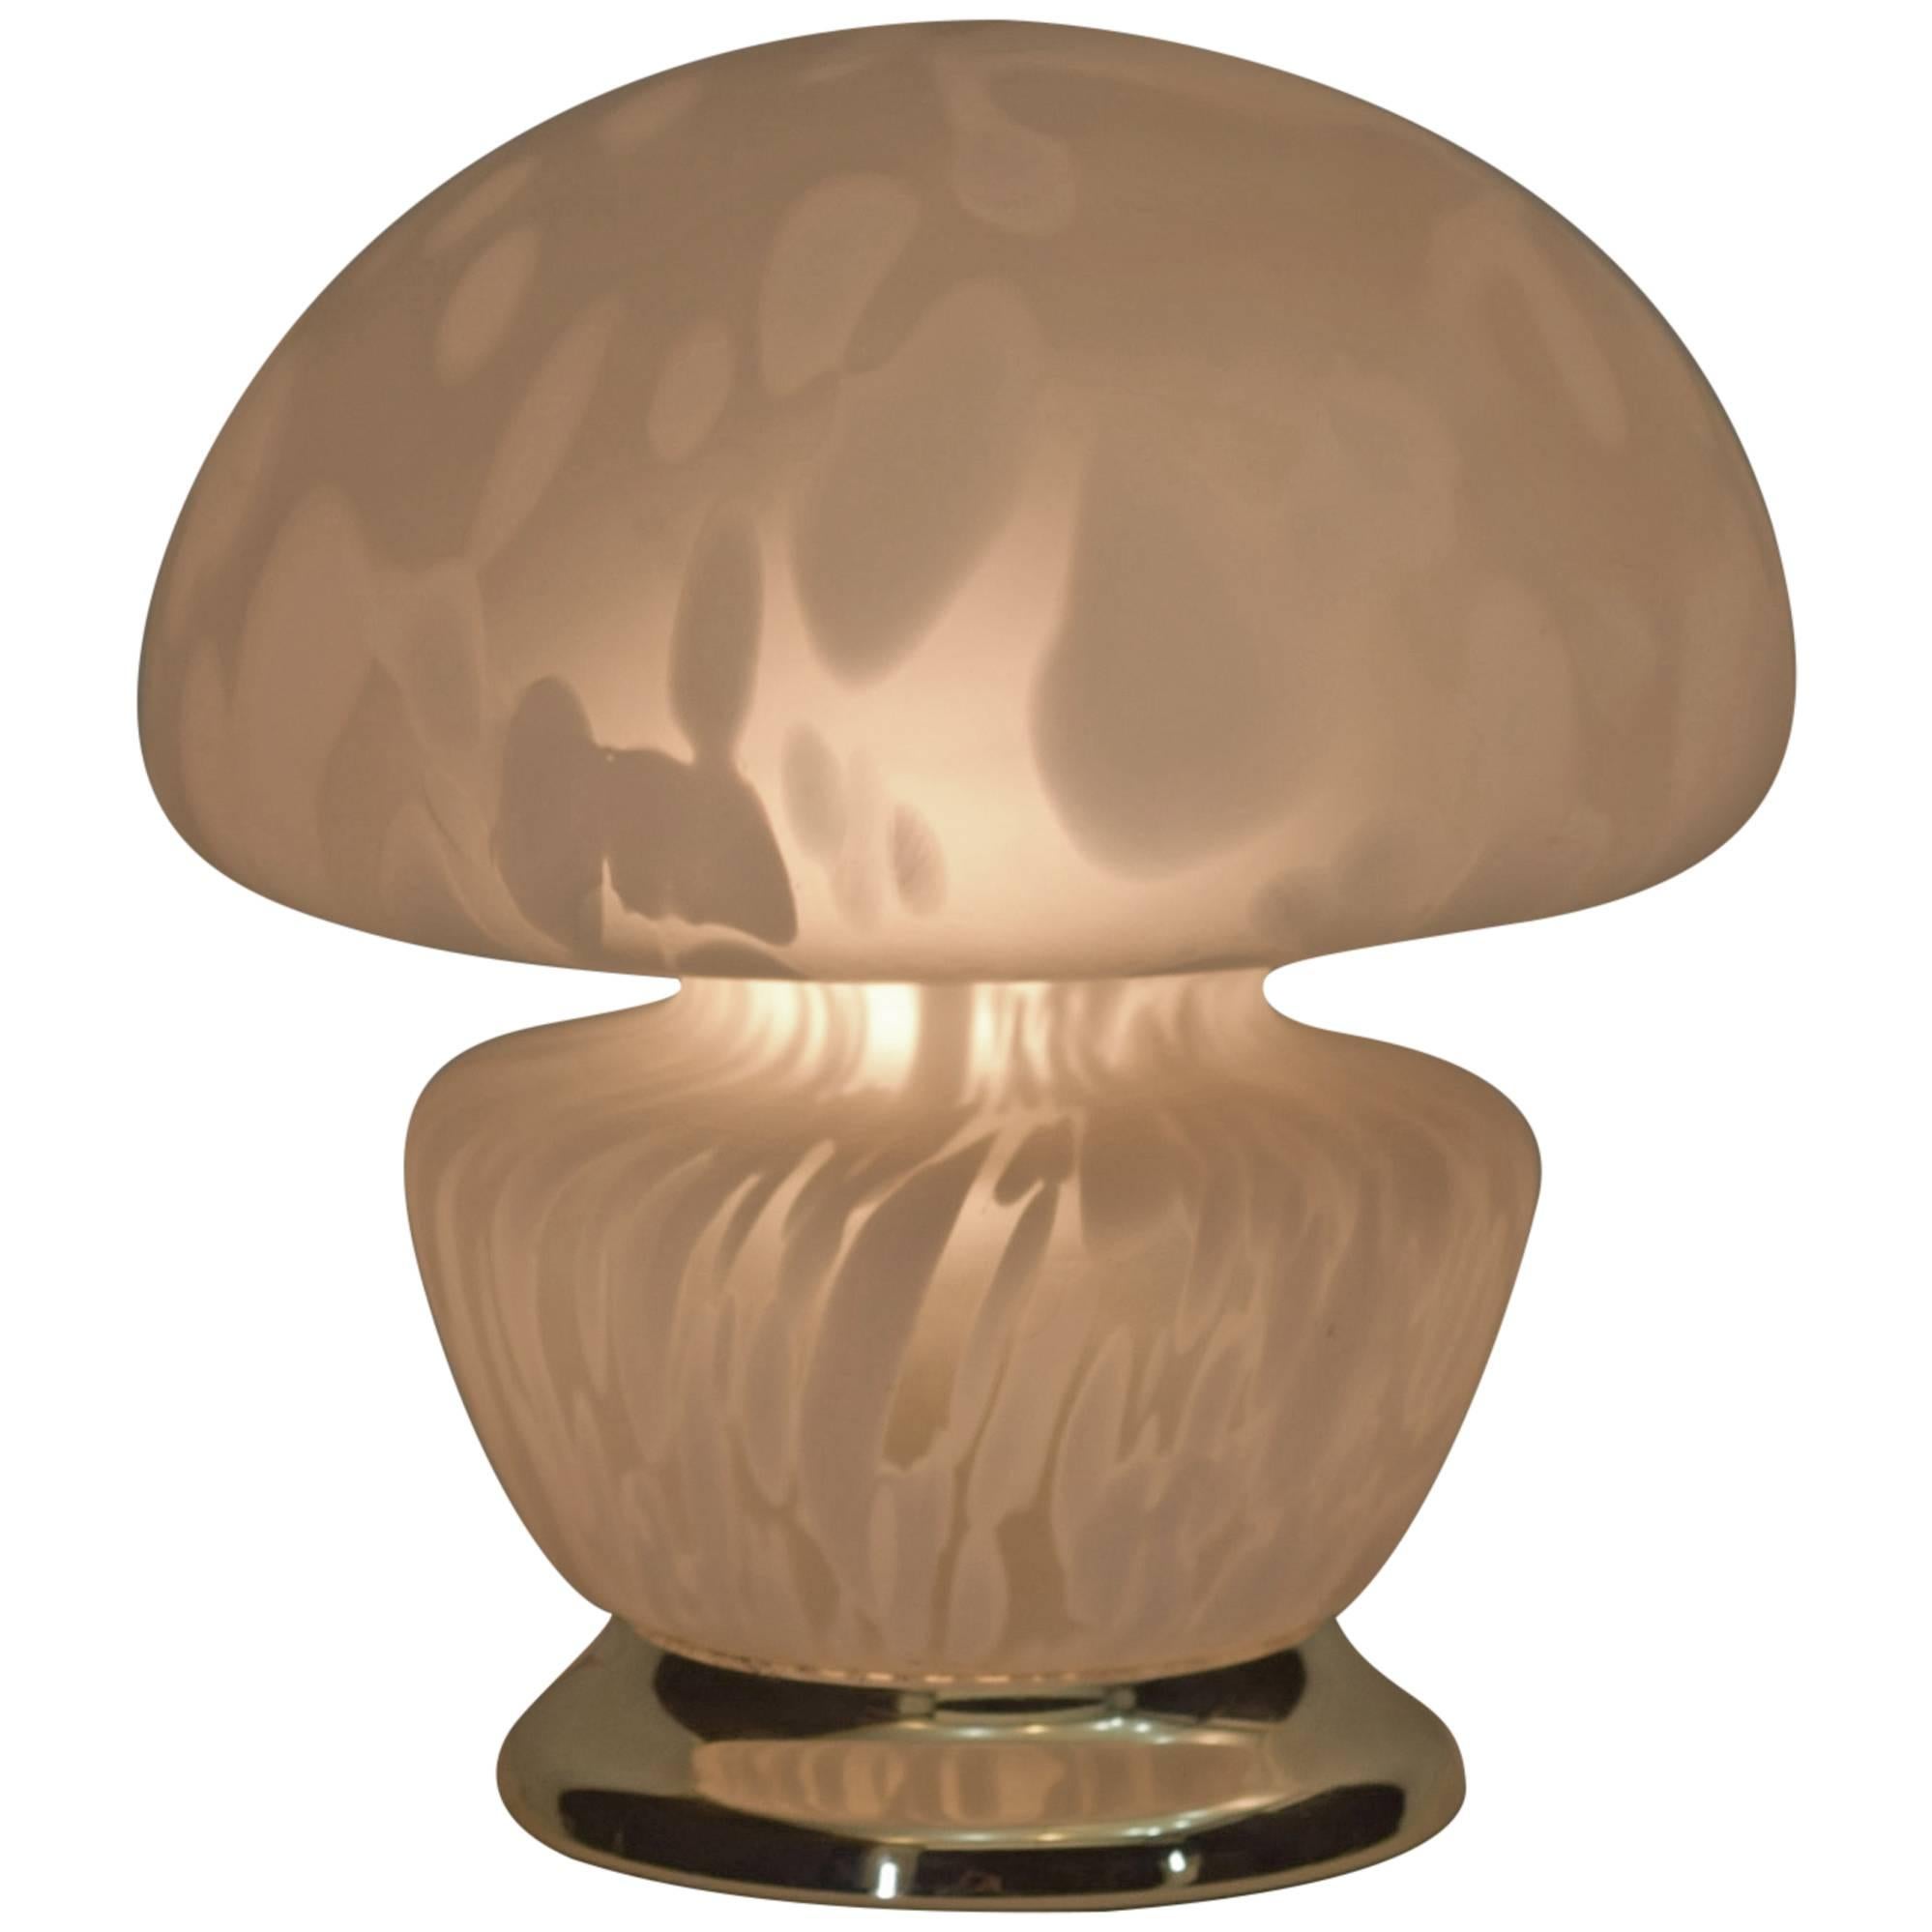 Murano Glass Mushroom Table Lamp from Italy, Handblown